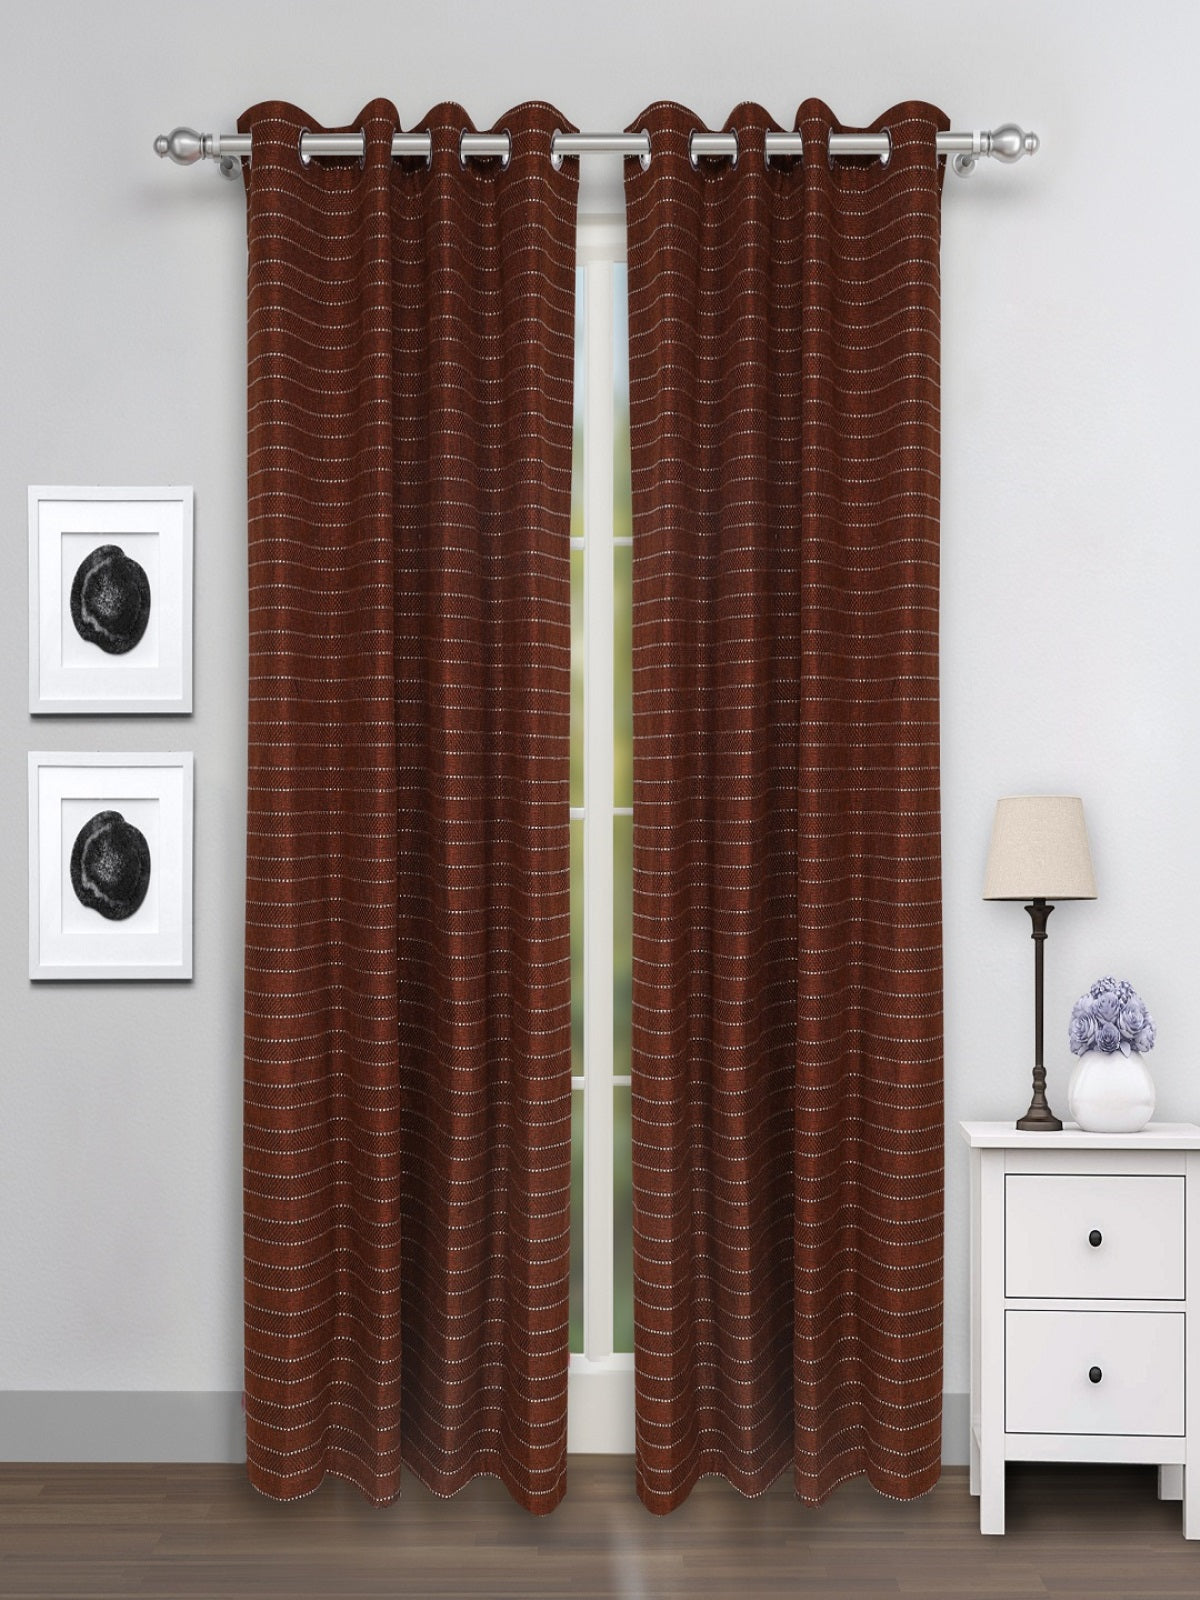 Romee Coffee Brown Striped Patterned Set of 2 Door Curtains